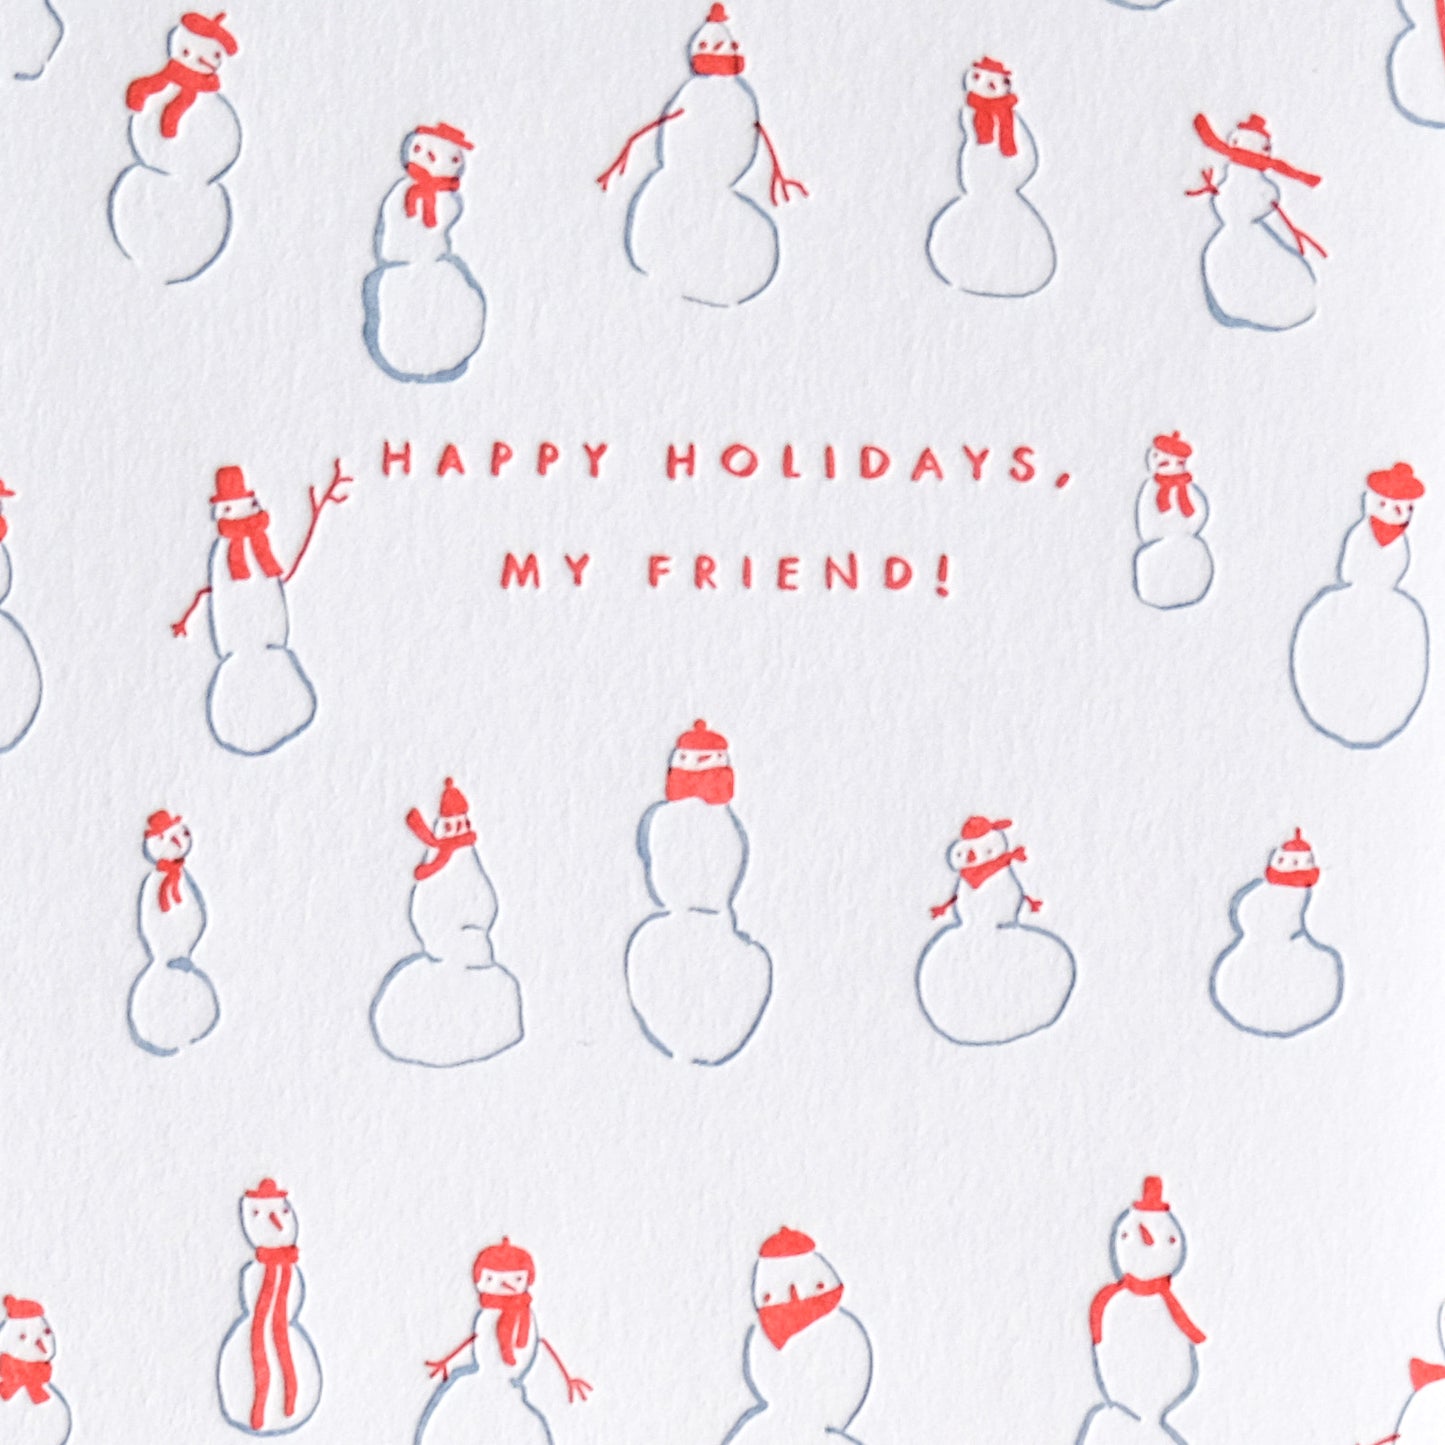 Snowman Friend Greeting Card